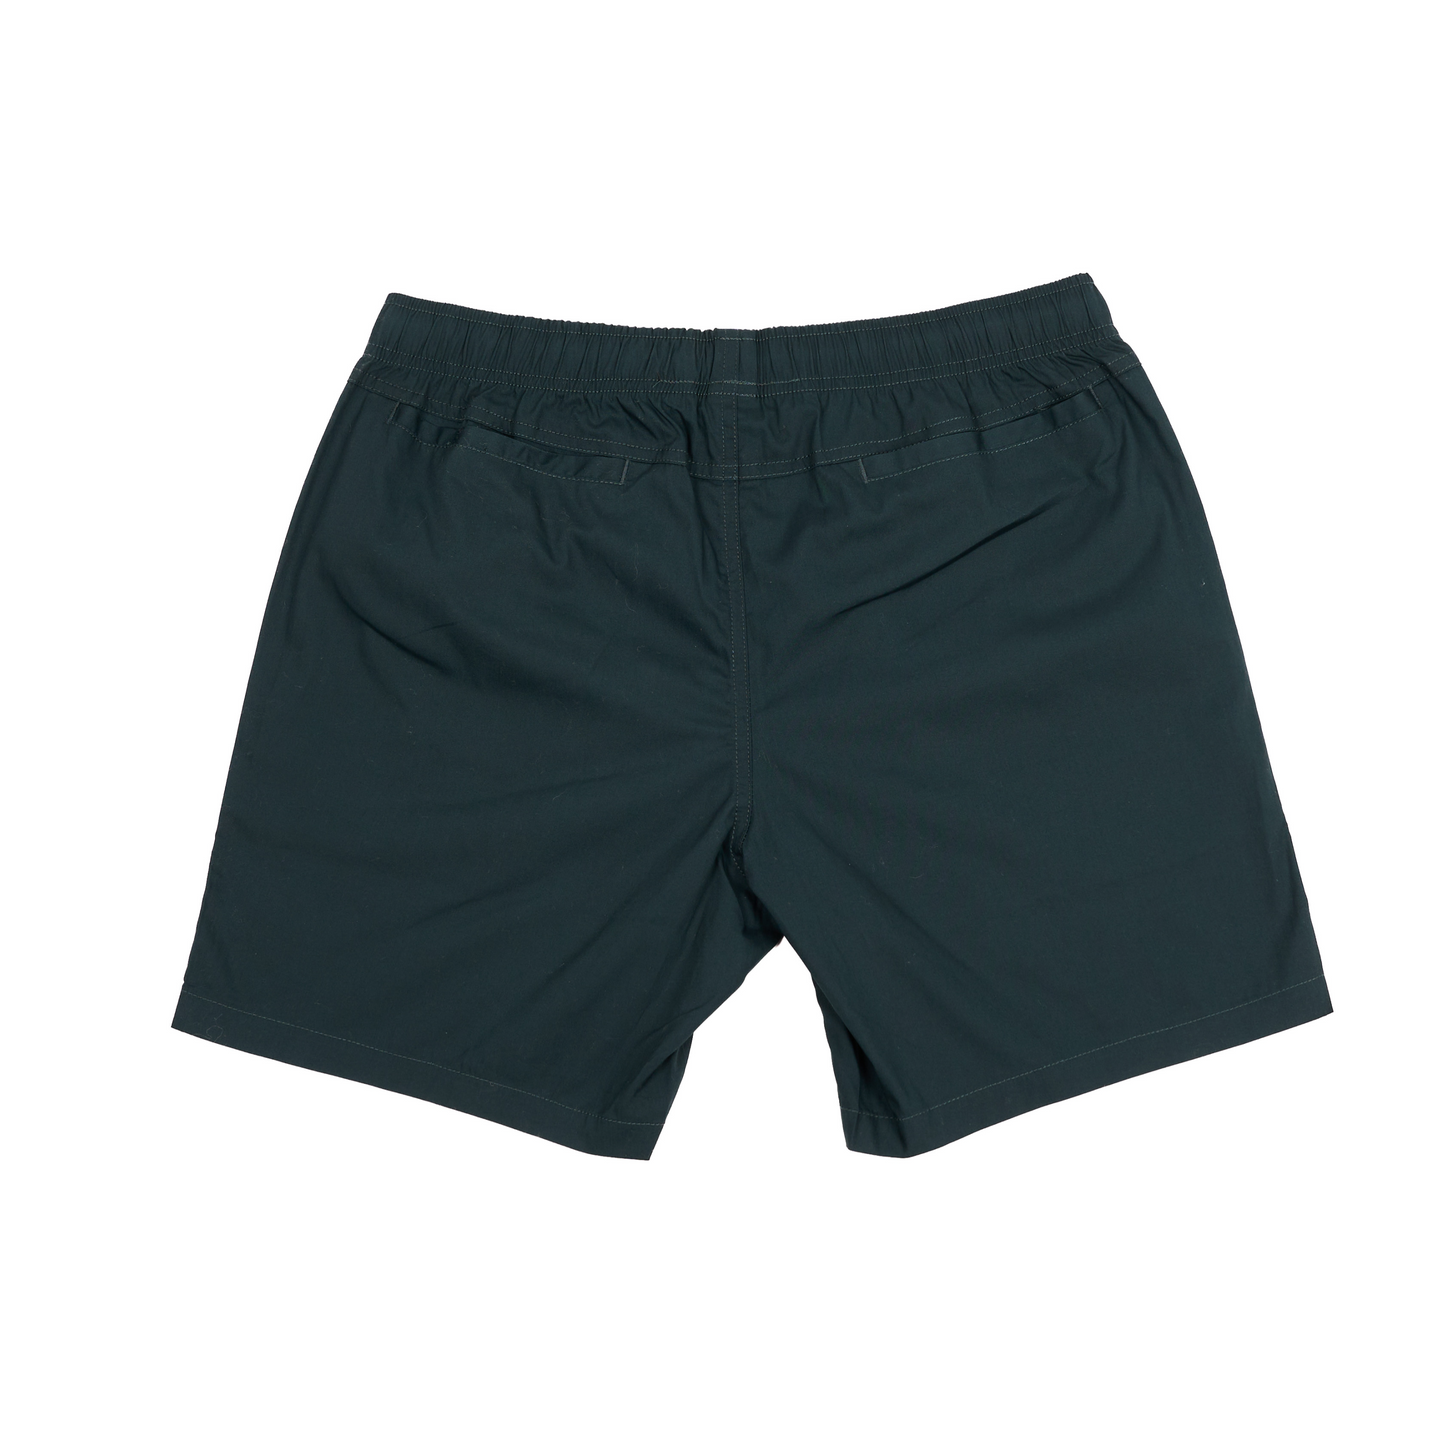 MouthPeace Beach Shorts